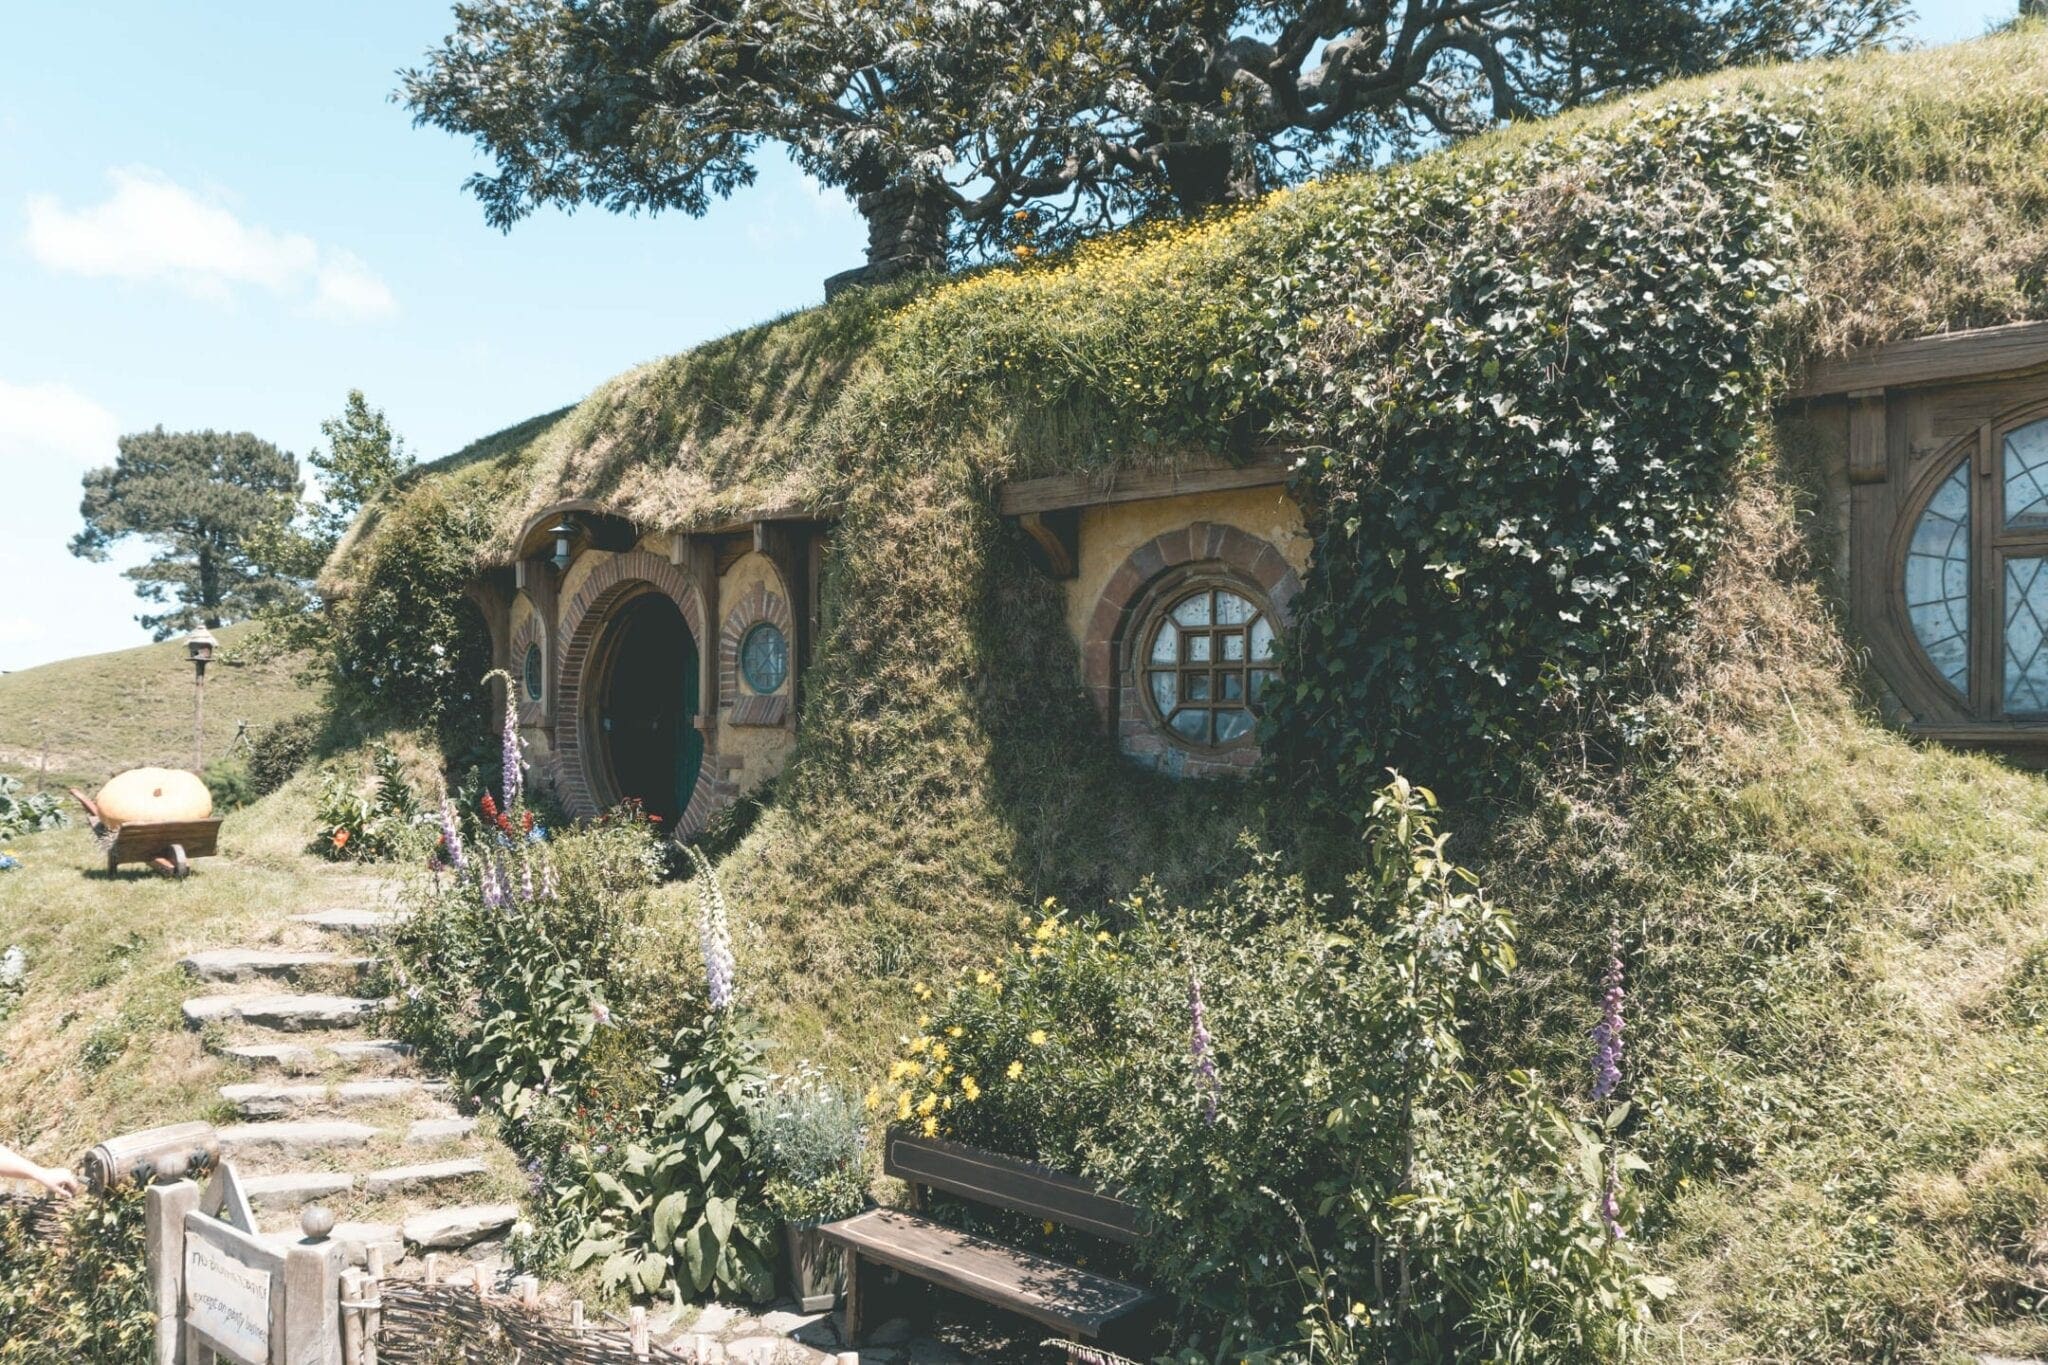 The Shire, De magie van The Shire komt tot leven in de Hobbiton Movie Set